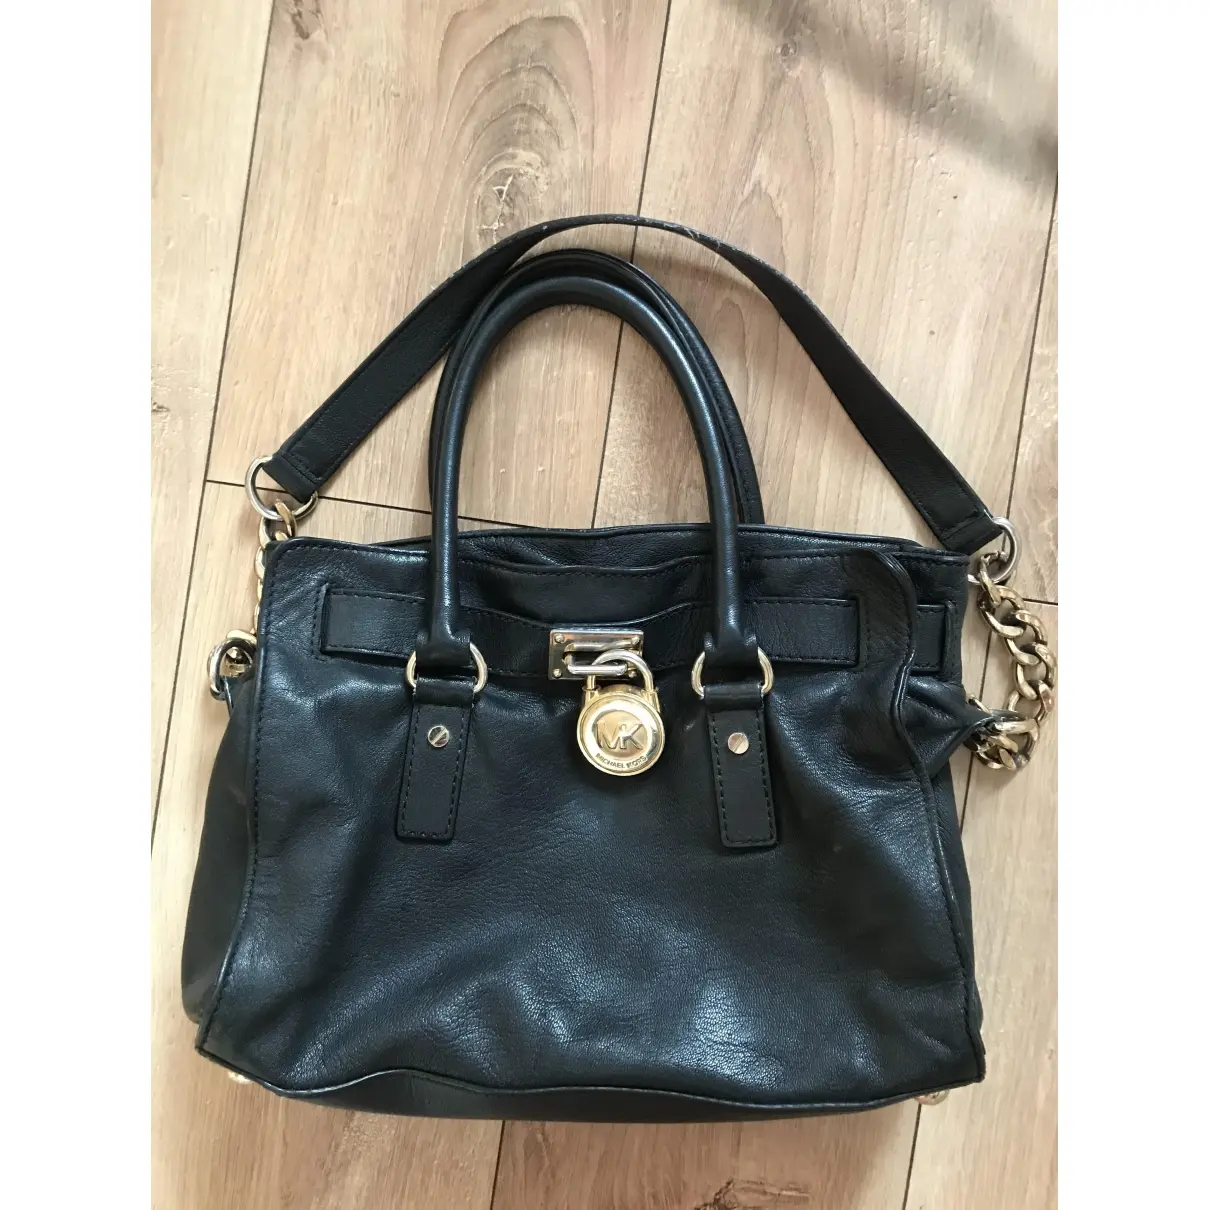 Buy Michael Kors Hamilton leather handbag online